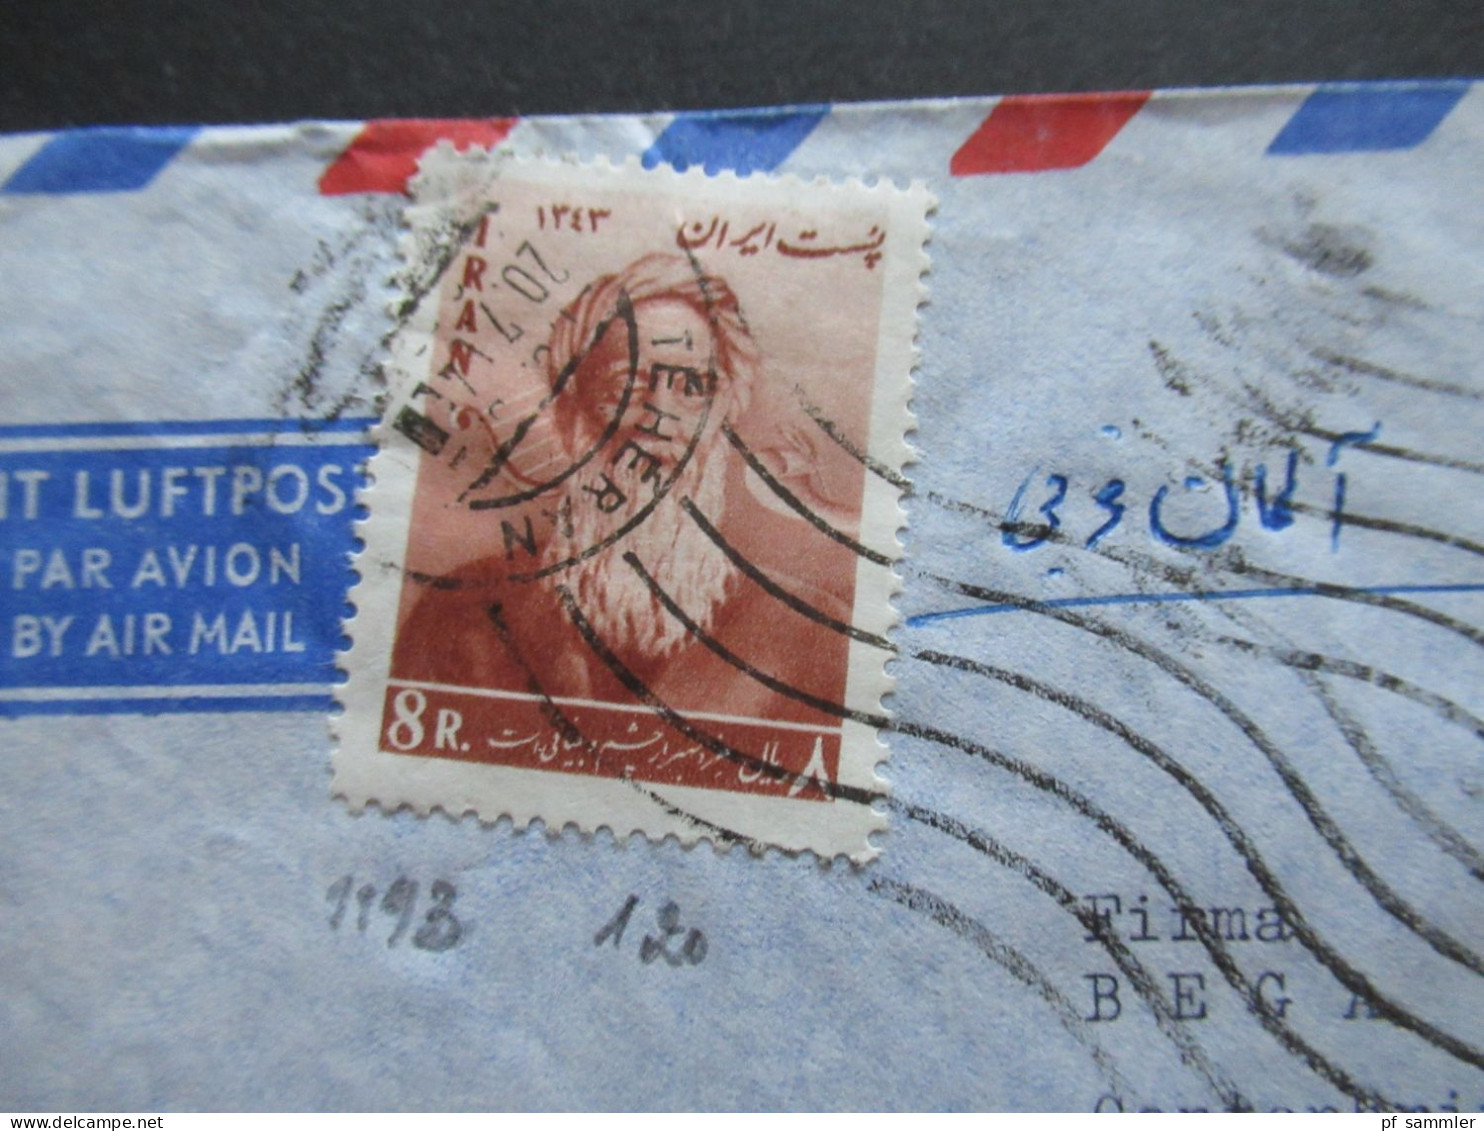 Asien Iran / Persien Teheran Persia 1960er Jahre Via Air Mail Luftpost 4 Belege Auslandsbriefe - Iran